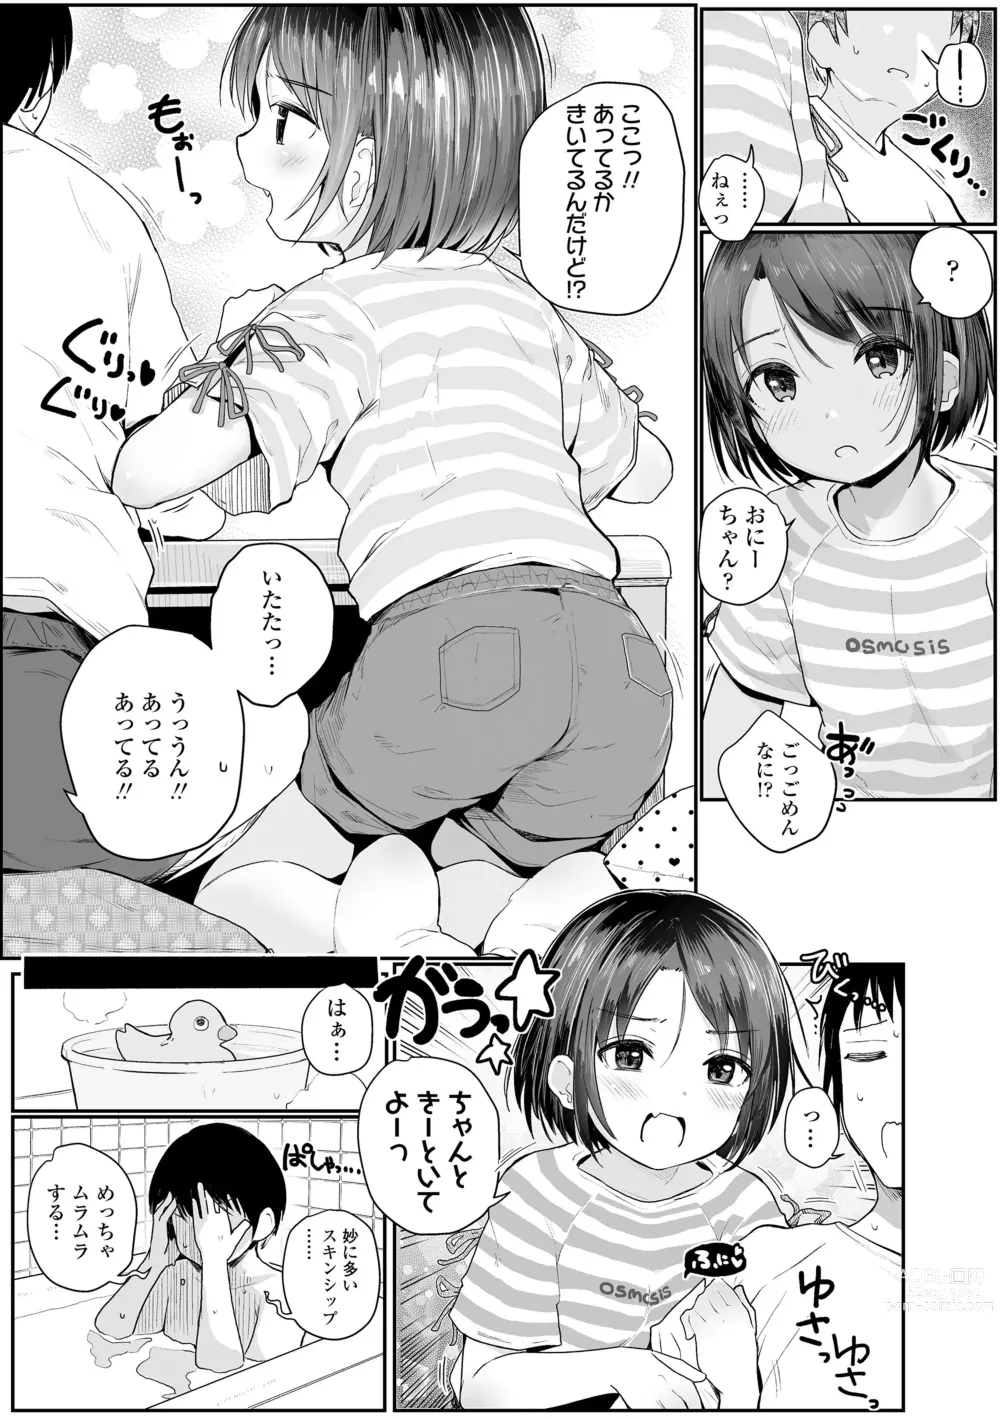 Page 7 of manga Chiisai Houga H Desho